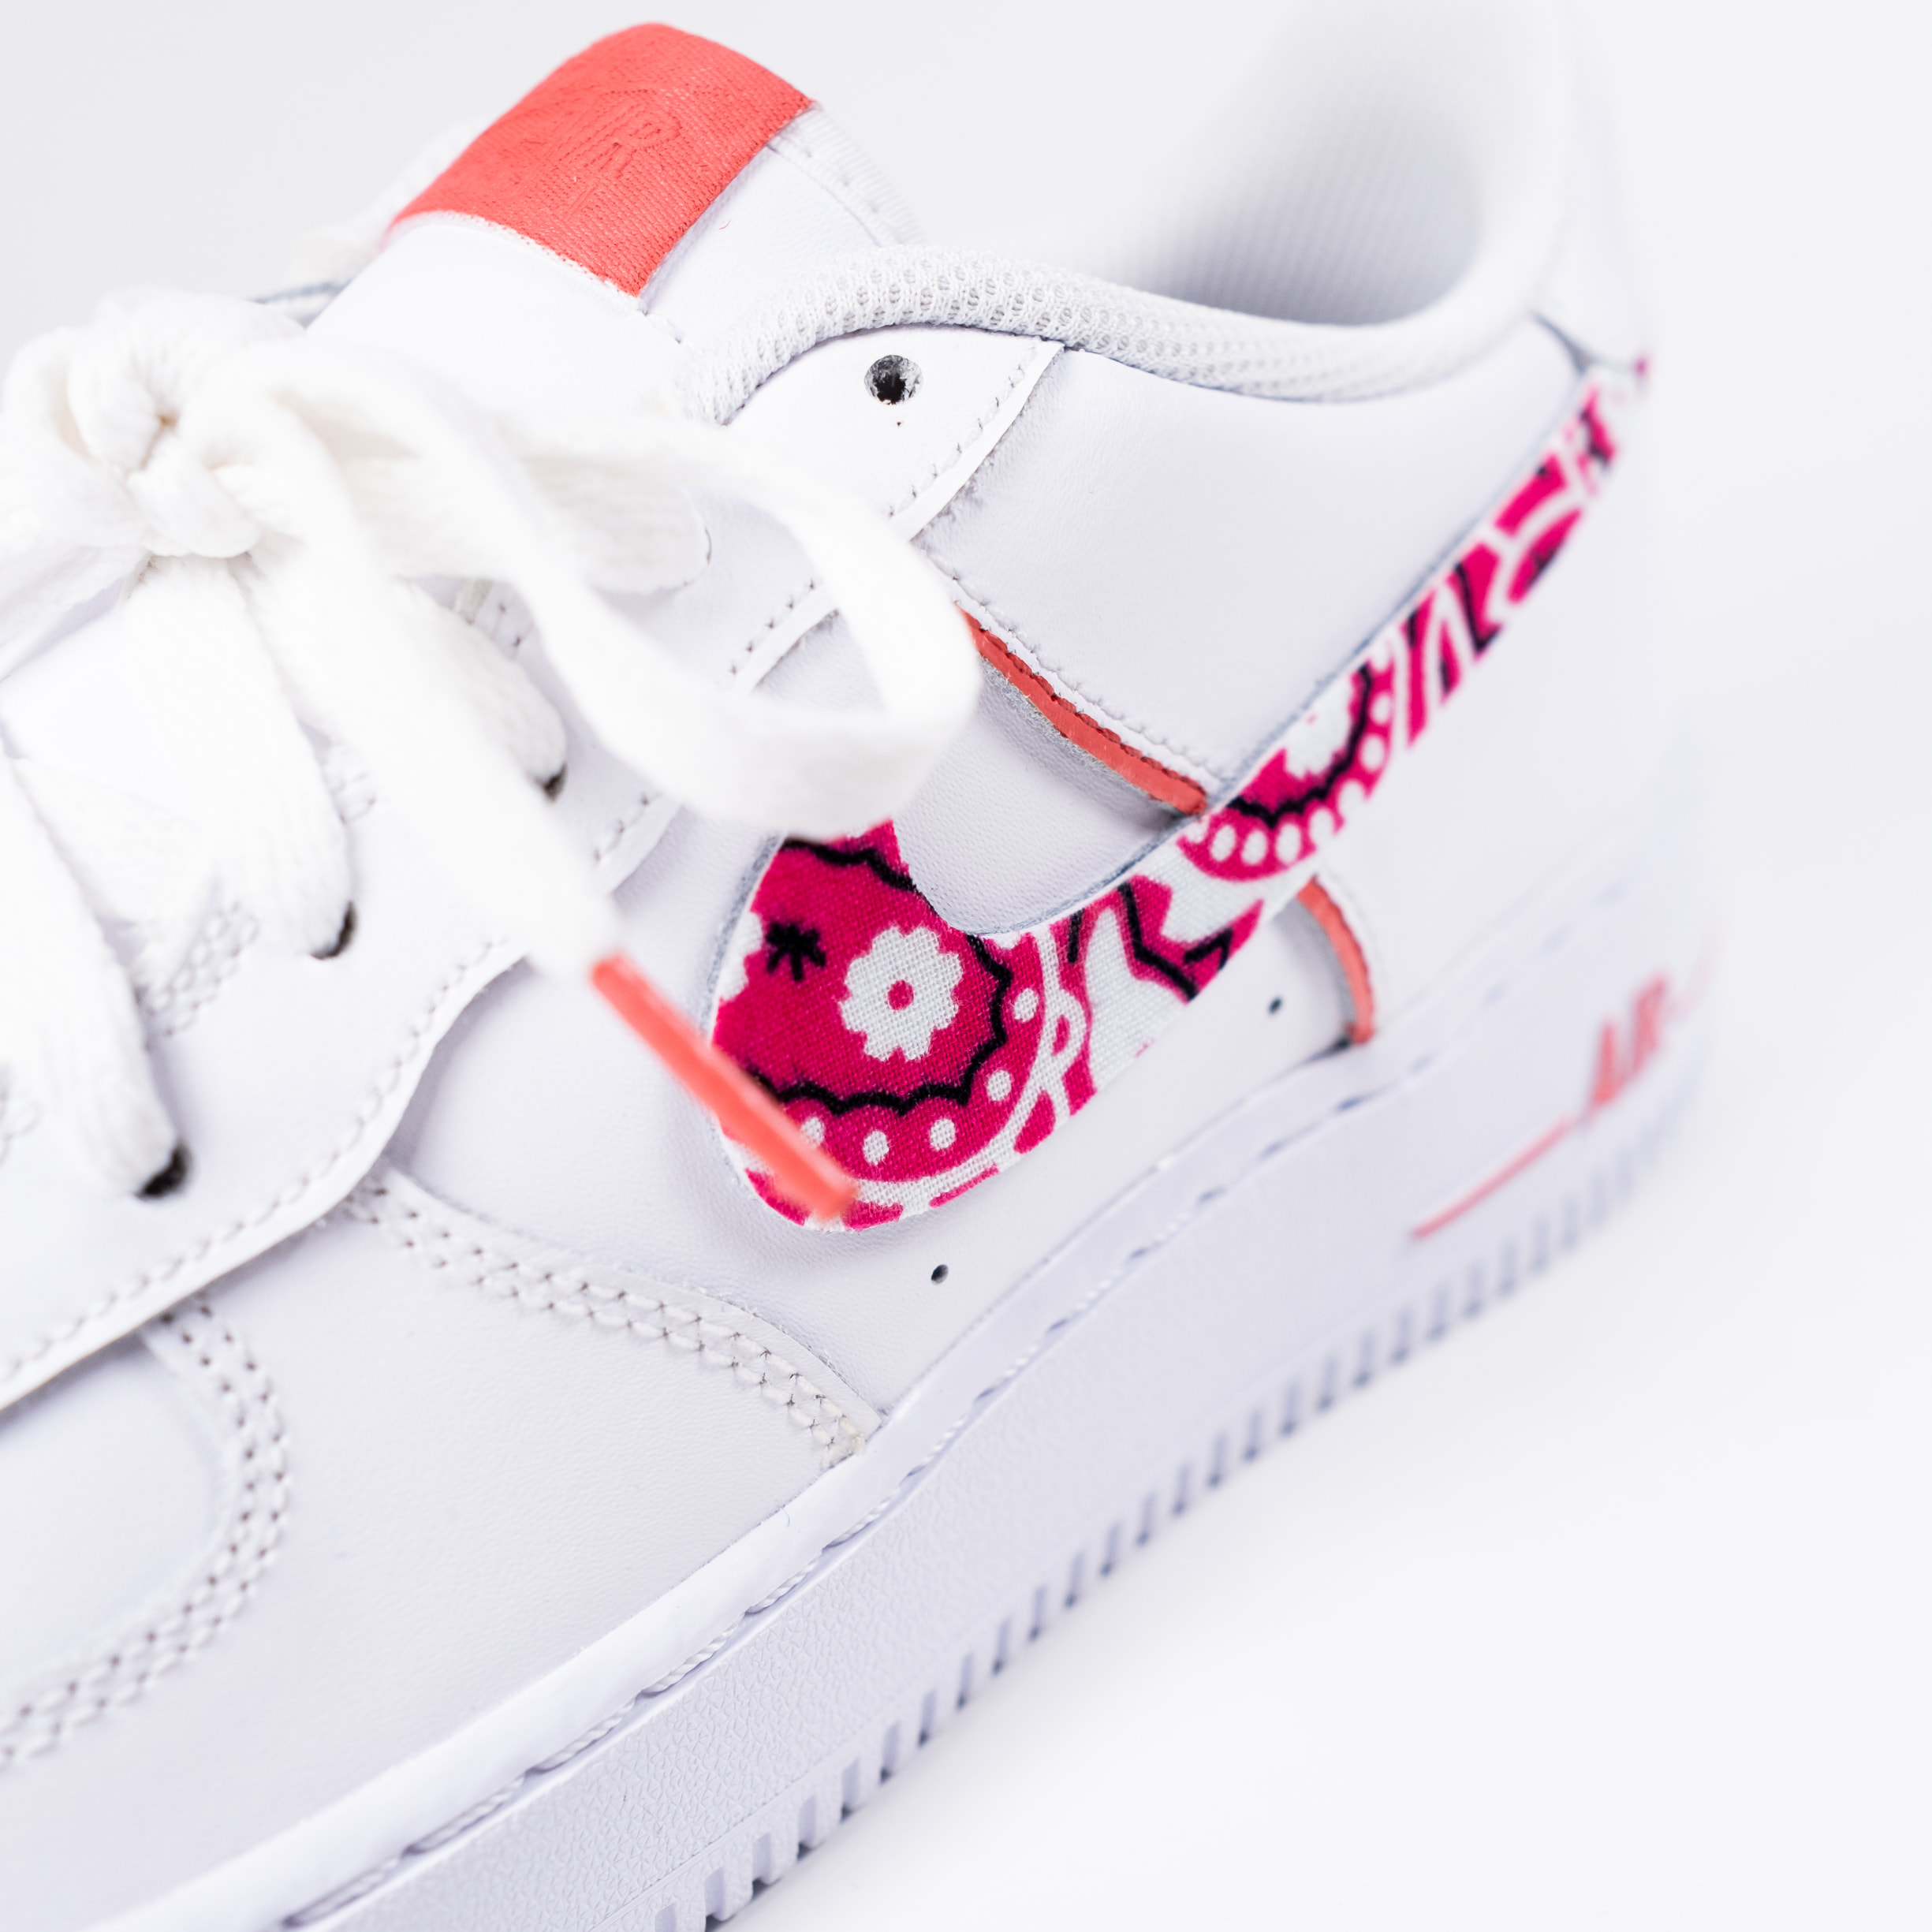 Nike Air Force 1 White Custom 'Hot Pink Bandana' Edition